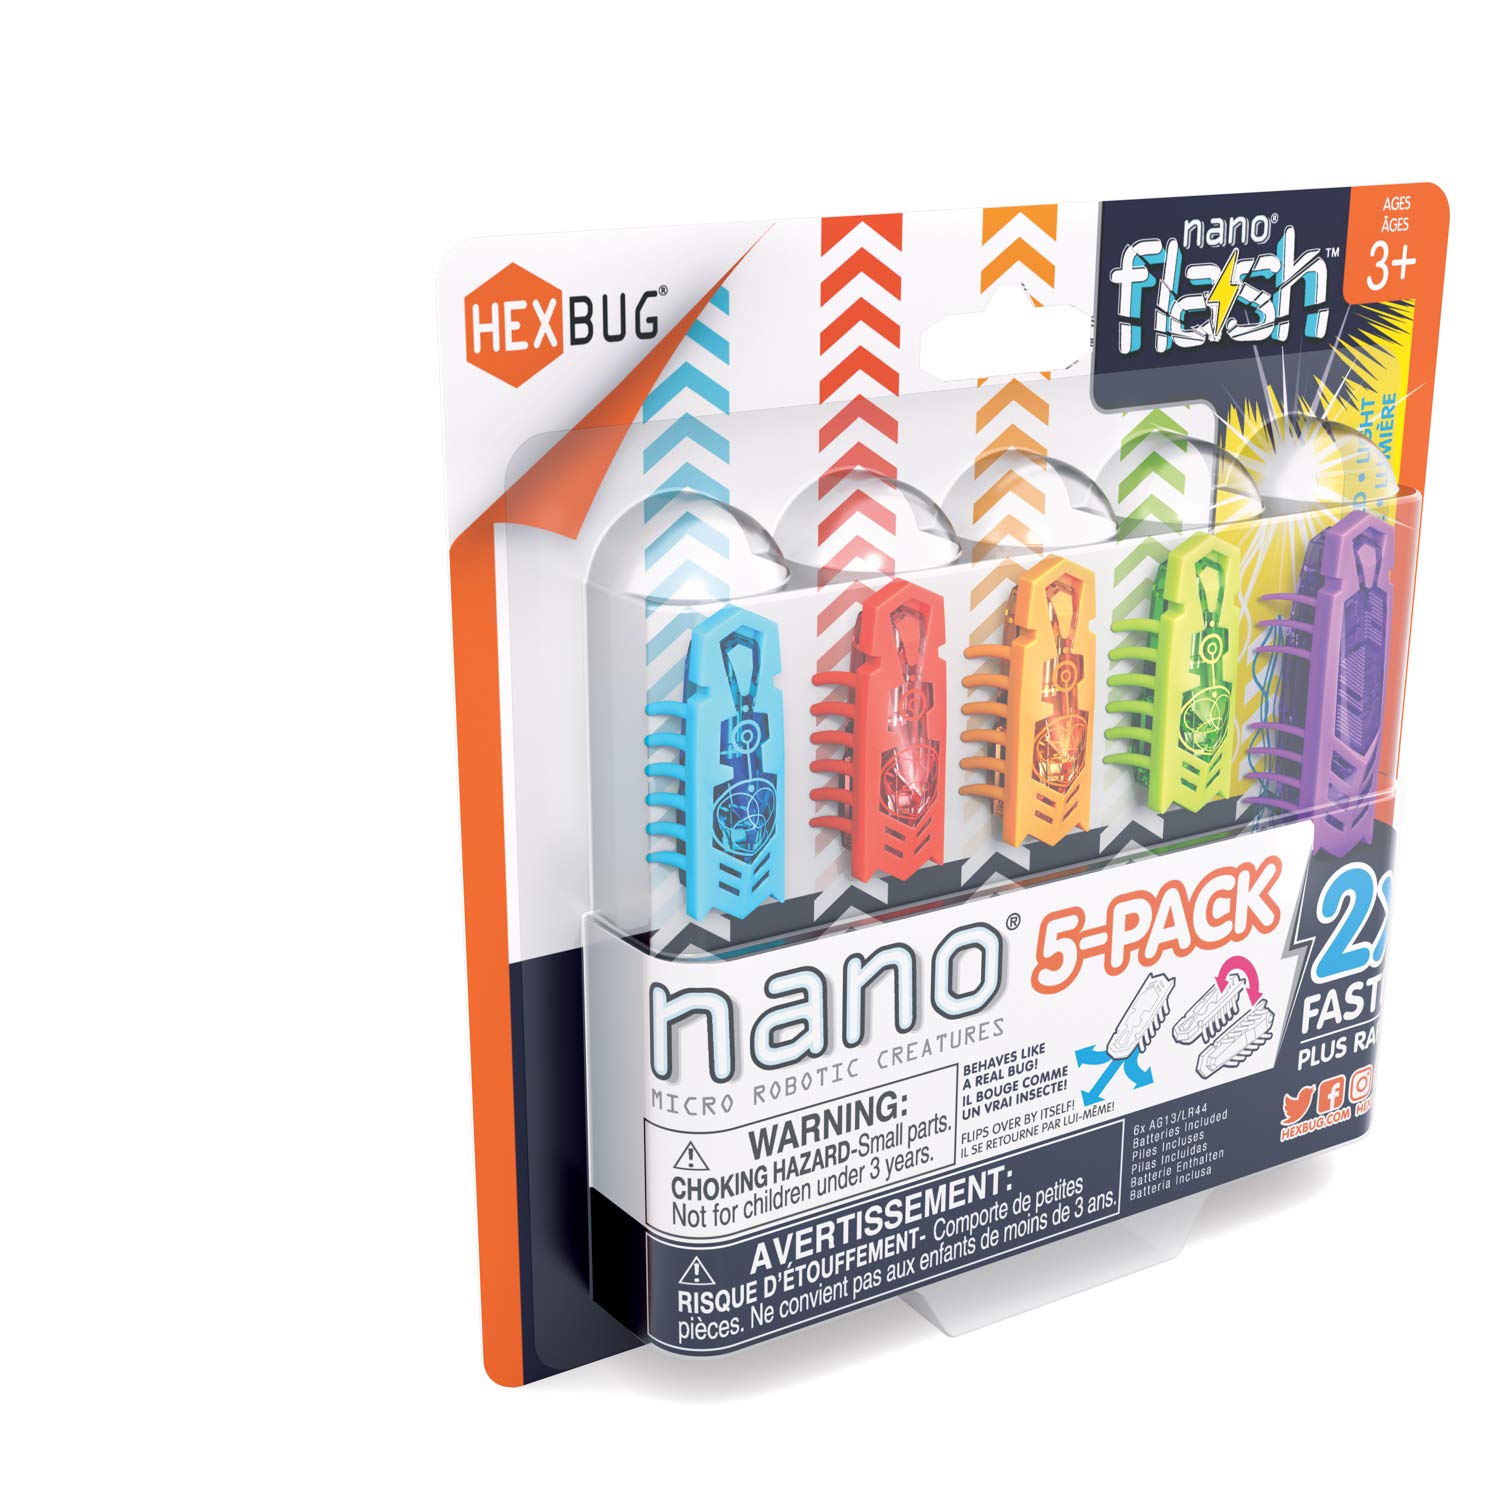 HEXBUG Nano 5 Pack - 4 nanos Plus Bonus Flash Nano - Sensory Vibration Toys for Kids and Cats - Small HEX Bug Tech Toy - Batteries Included - Multicolor